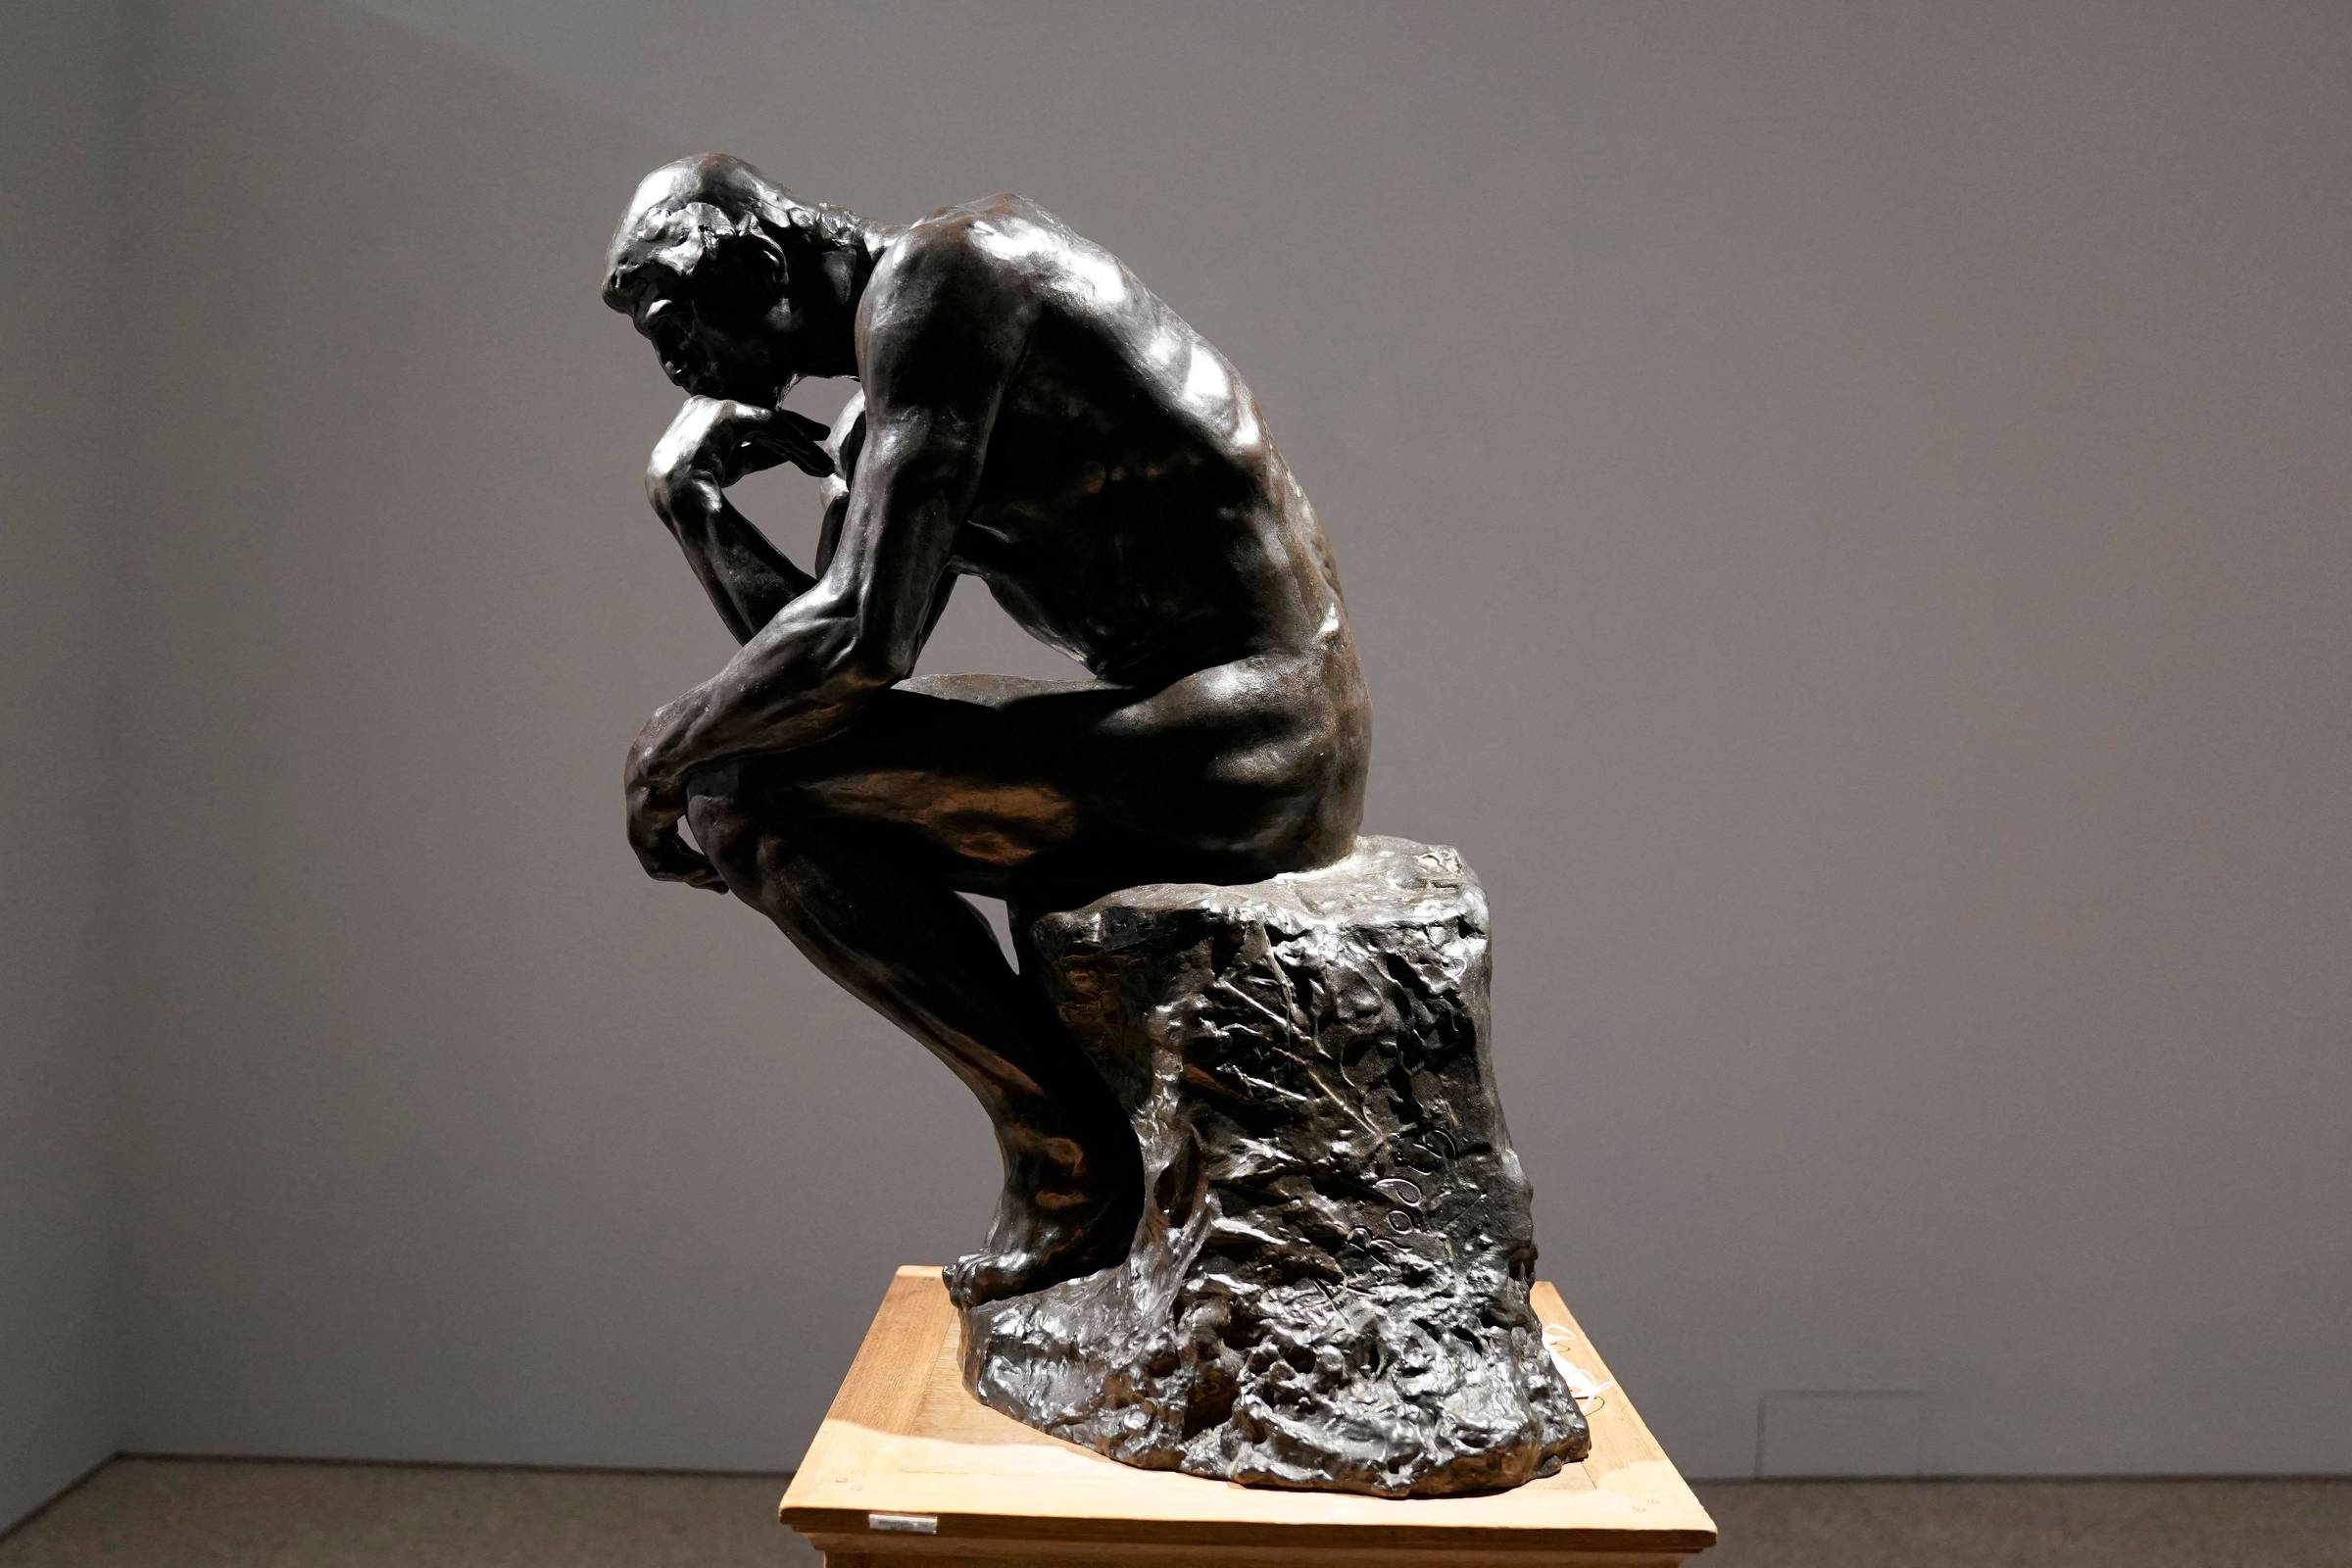 Subastaron la legendaria estatua de “El Pensador” de Rodin por una millonada